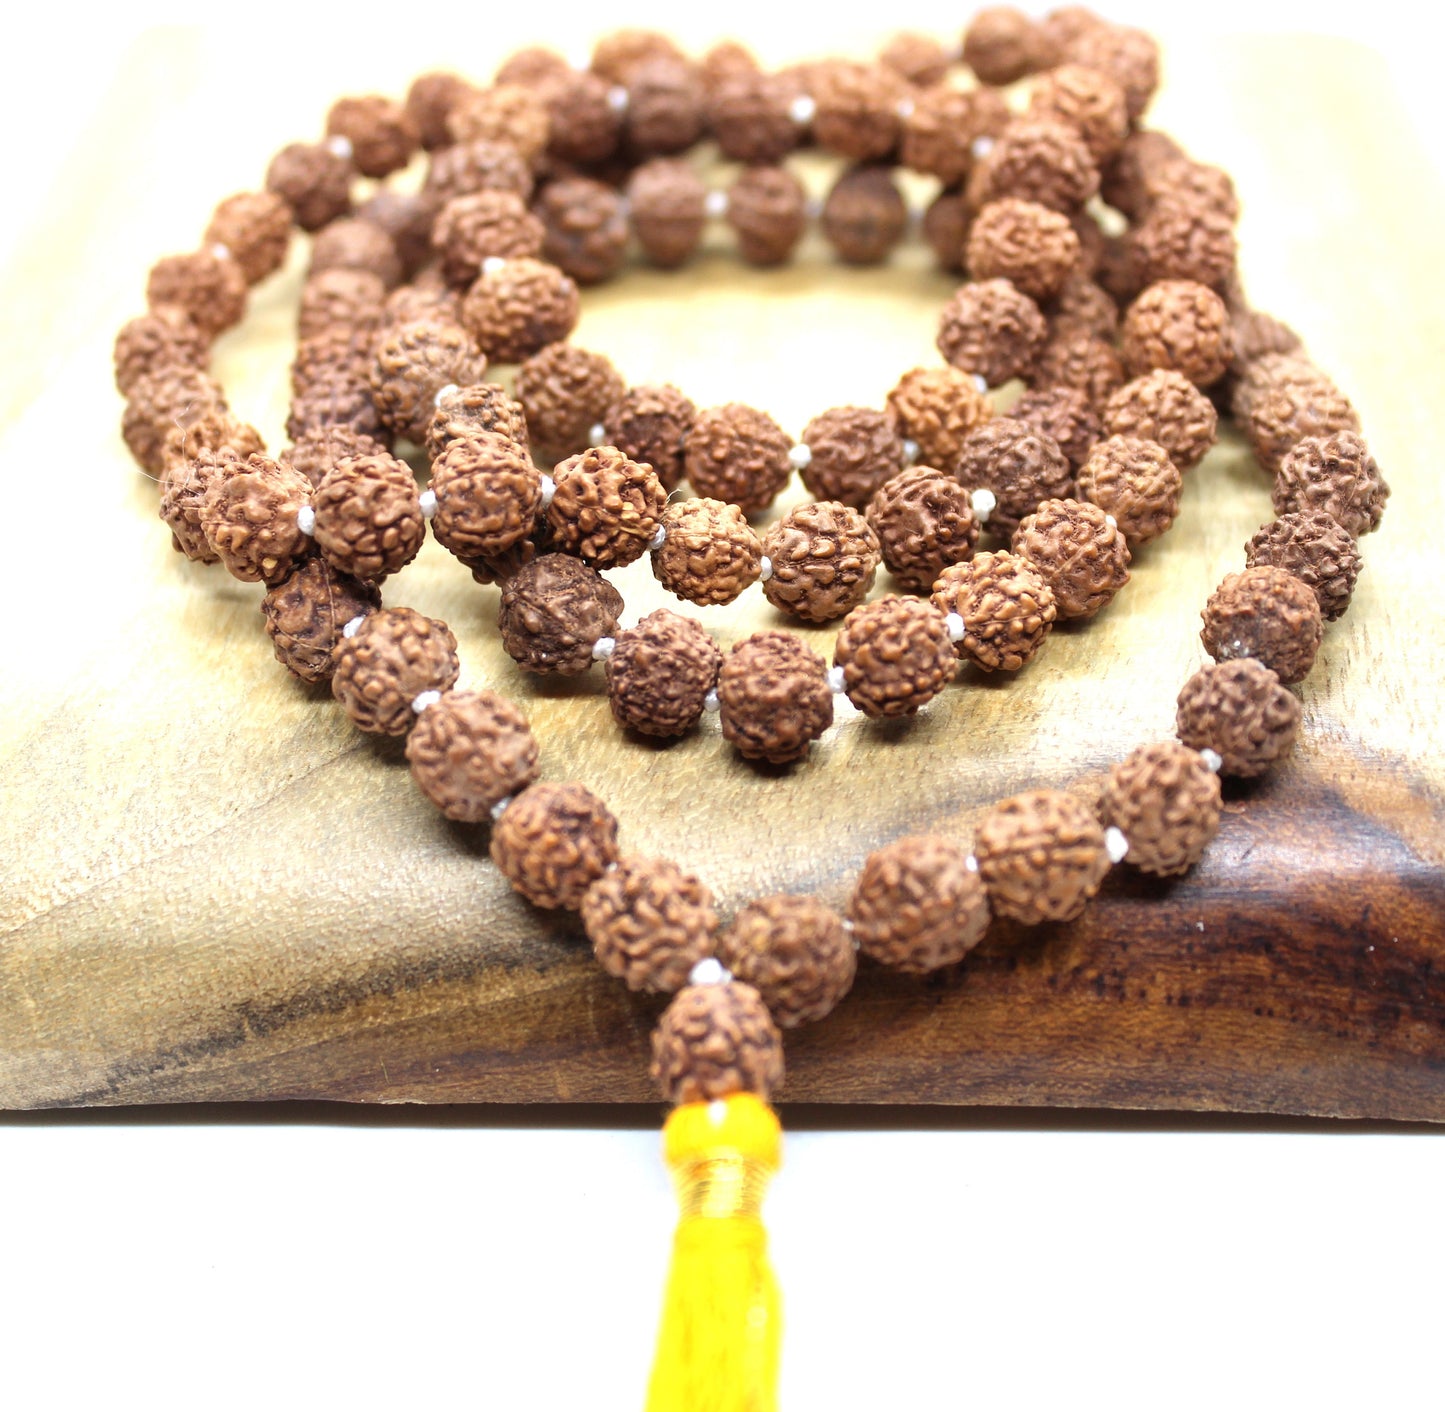 Rudraksha mala 8 mm knotted 108 + 1 prayer beads, Long Orange Tassel necklace, mens mala india, yoga meditation buddhist tibetan prayer mala